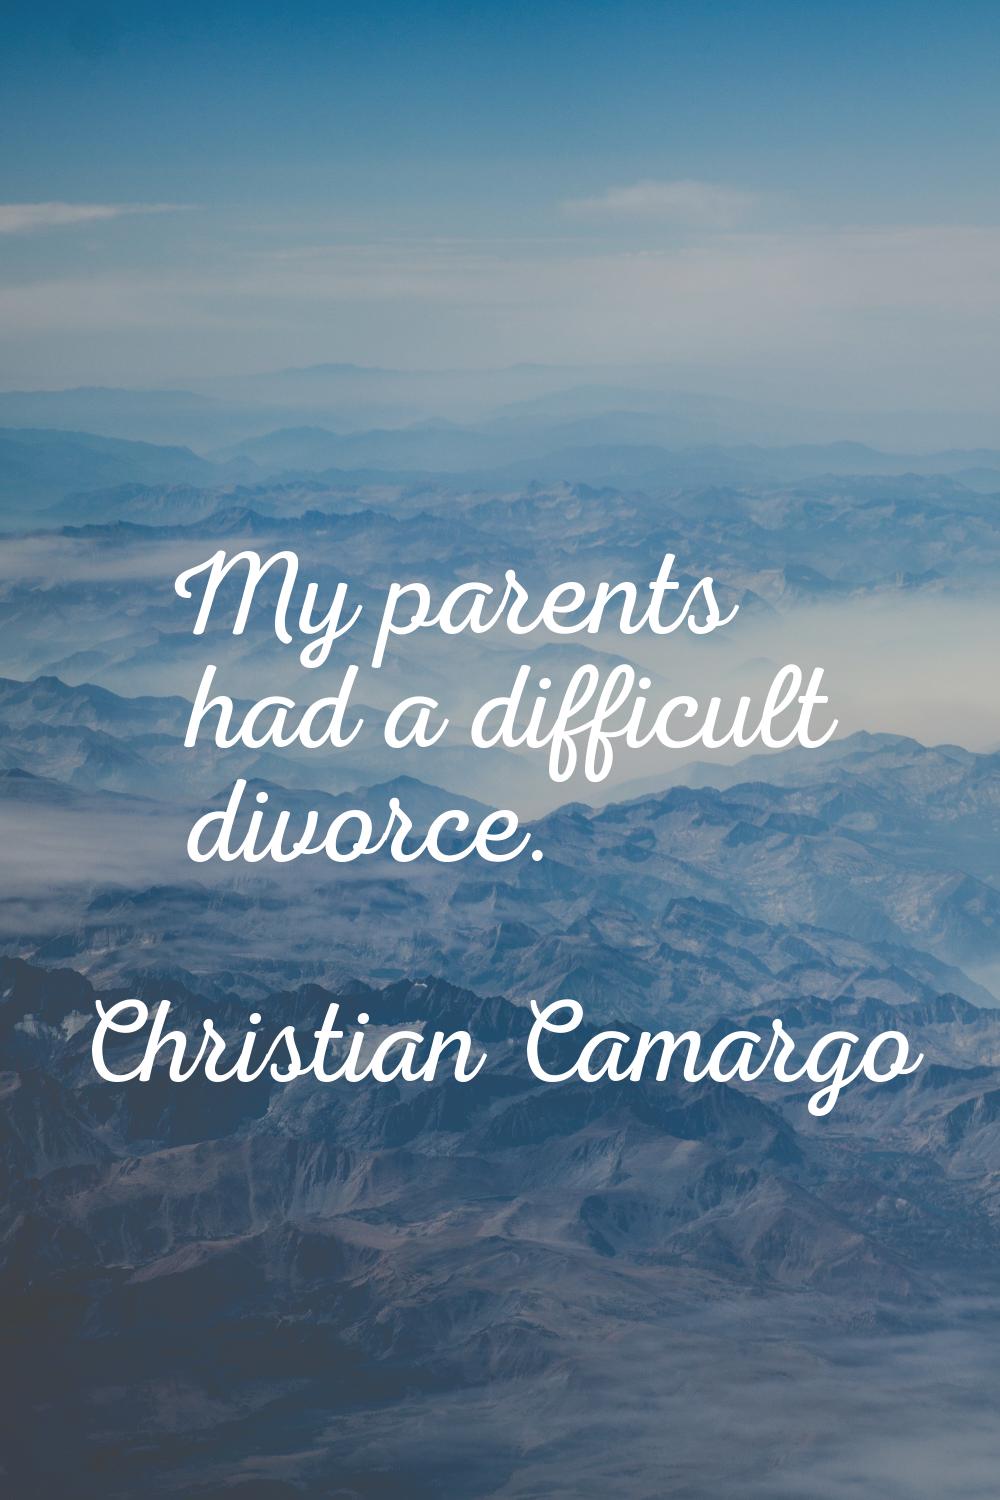 My parents had a difficult divorce.